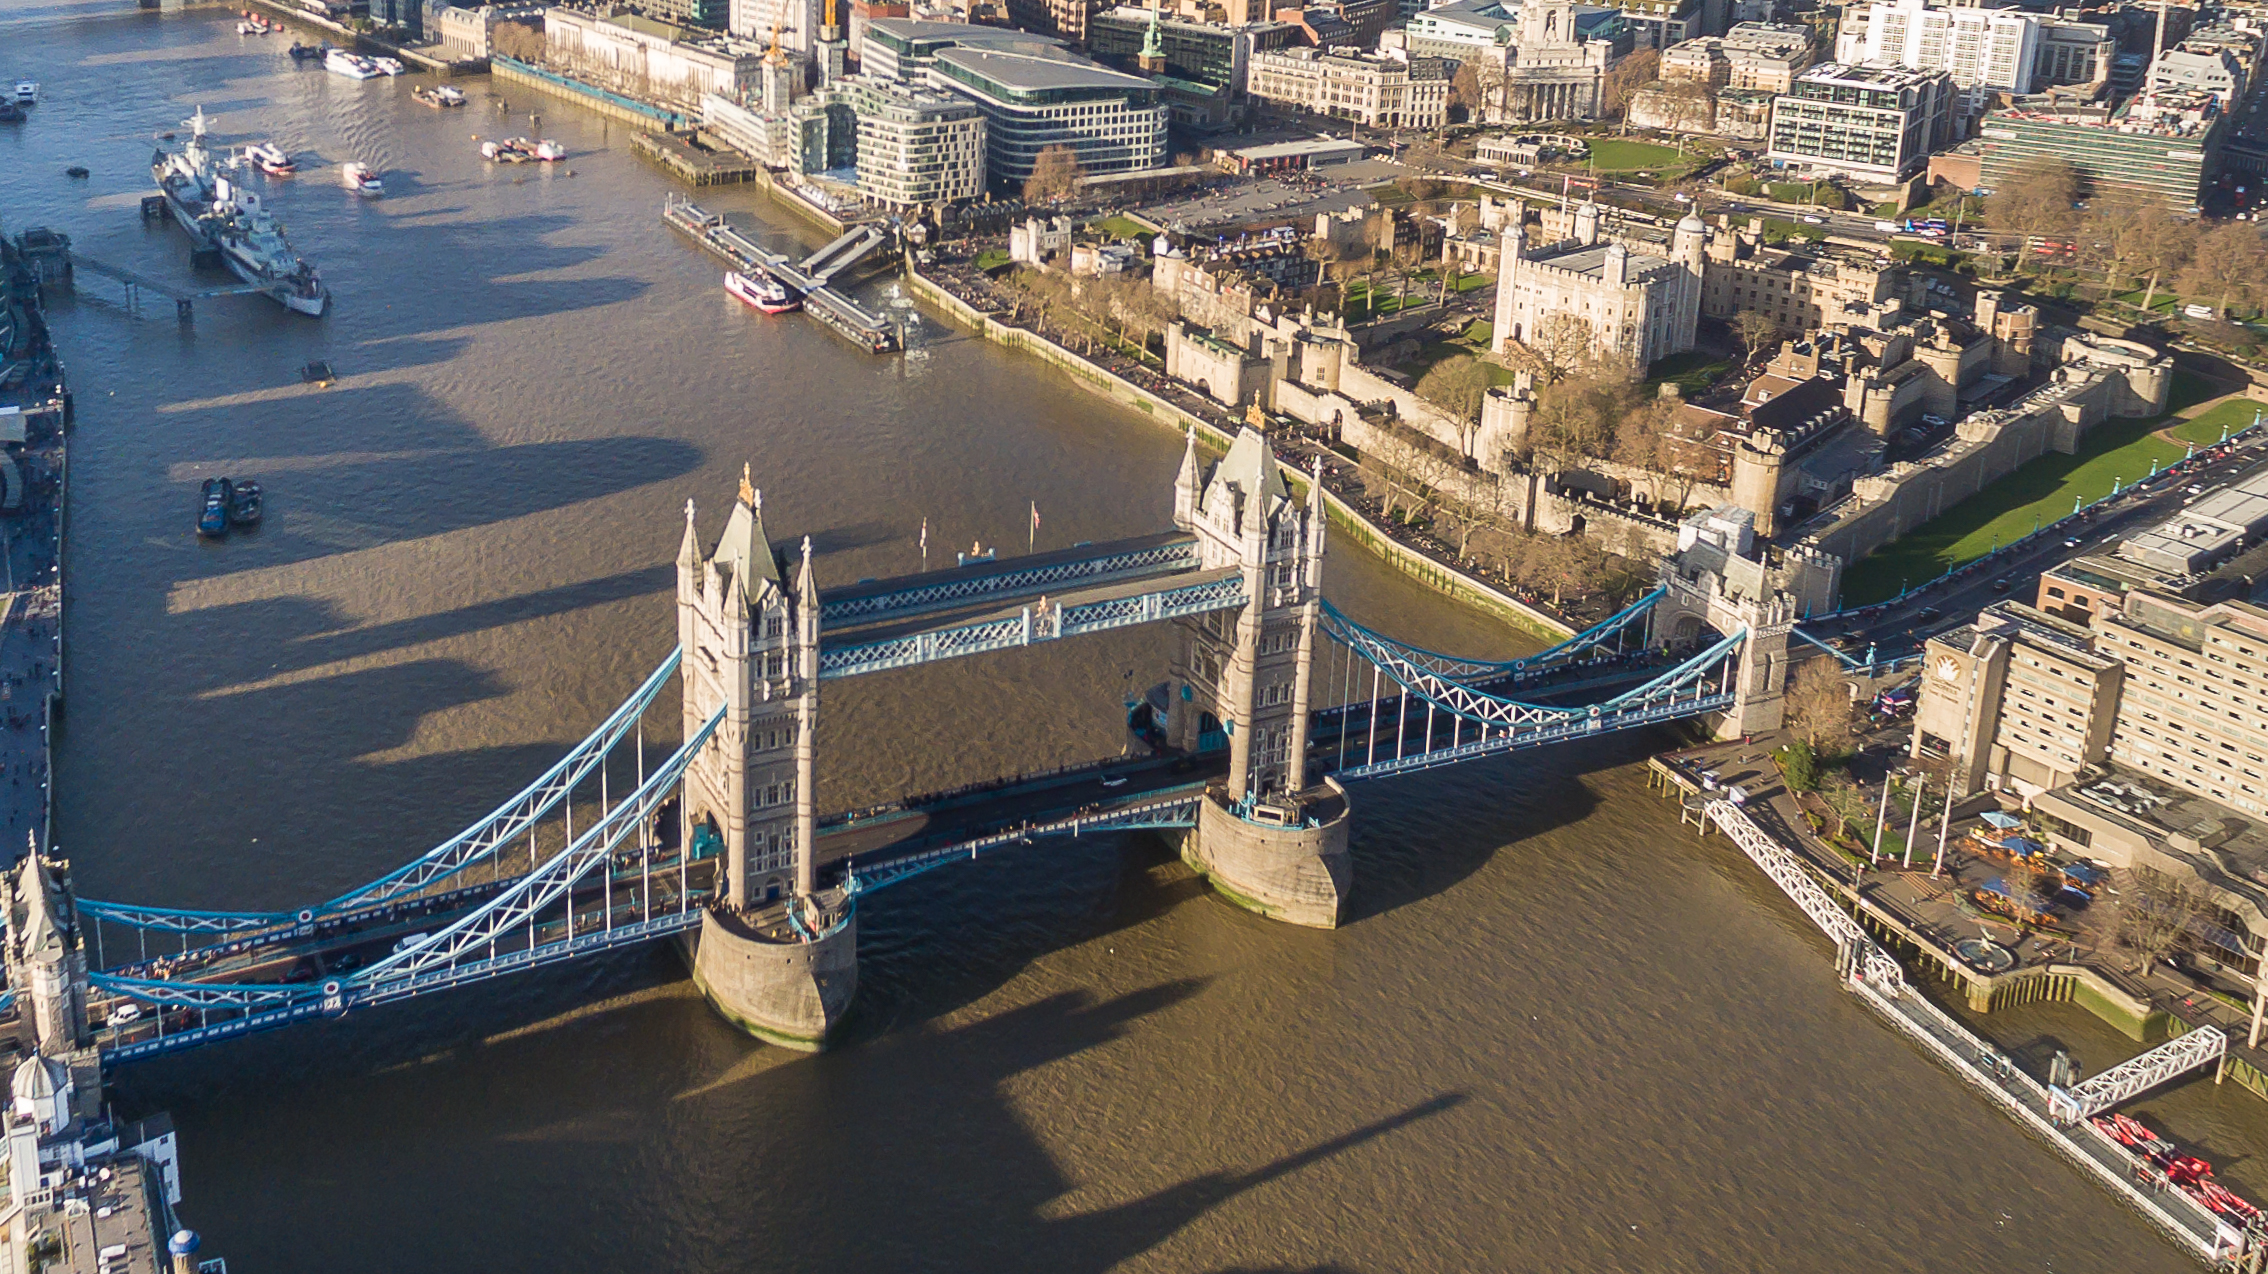 File:Tower Bridge London 22.jpg - Wikimedia Commons